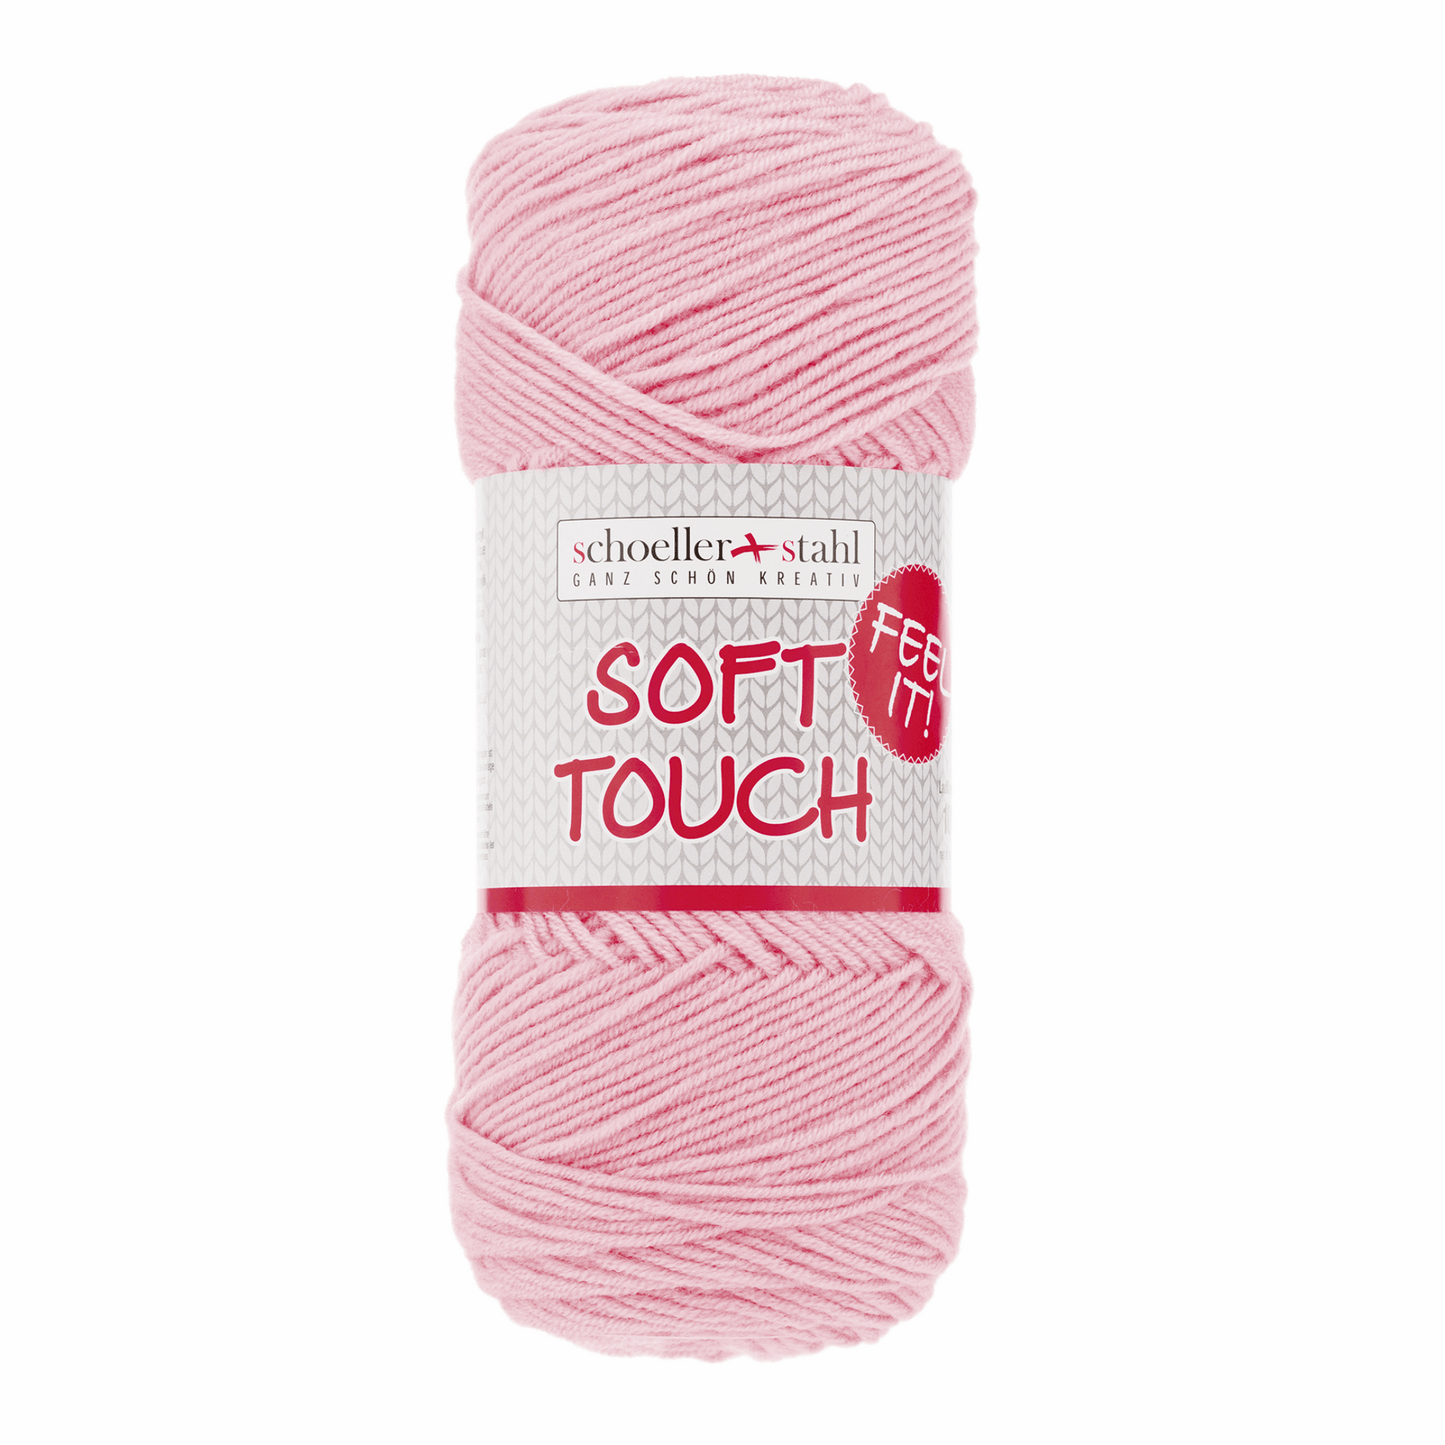 Soft touch 100g pullskin, 90283, Farbe 6, rosa